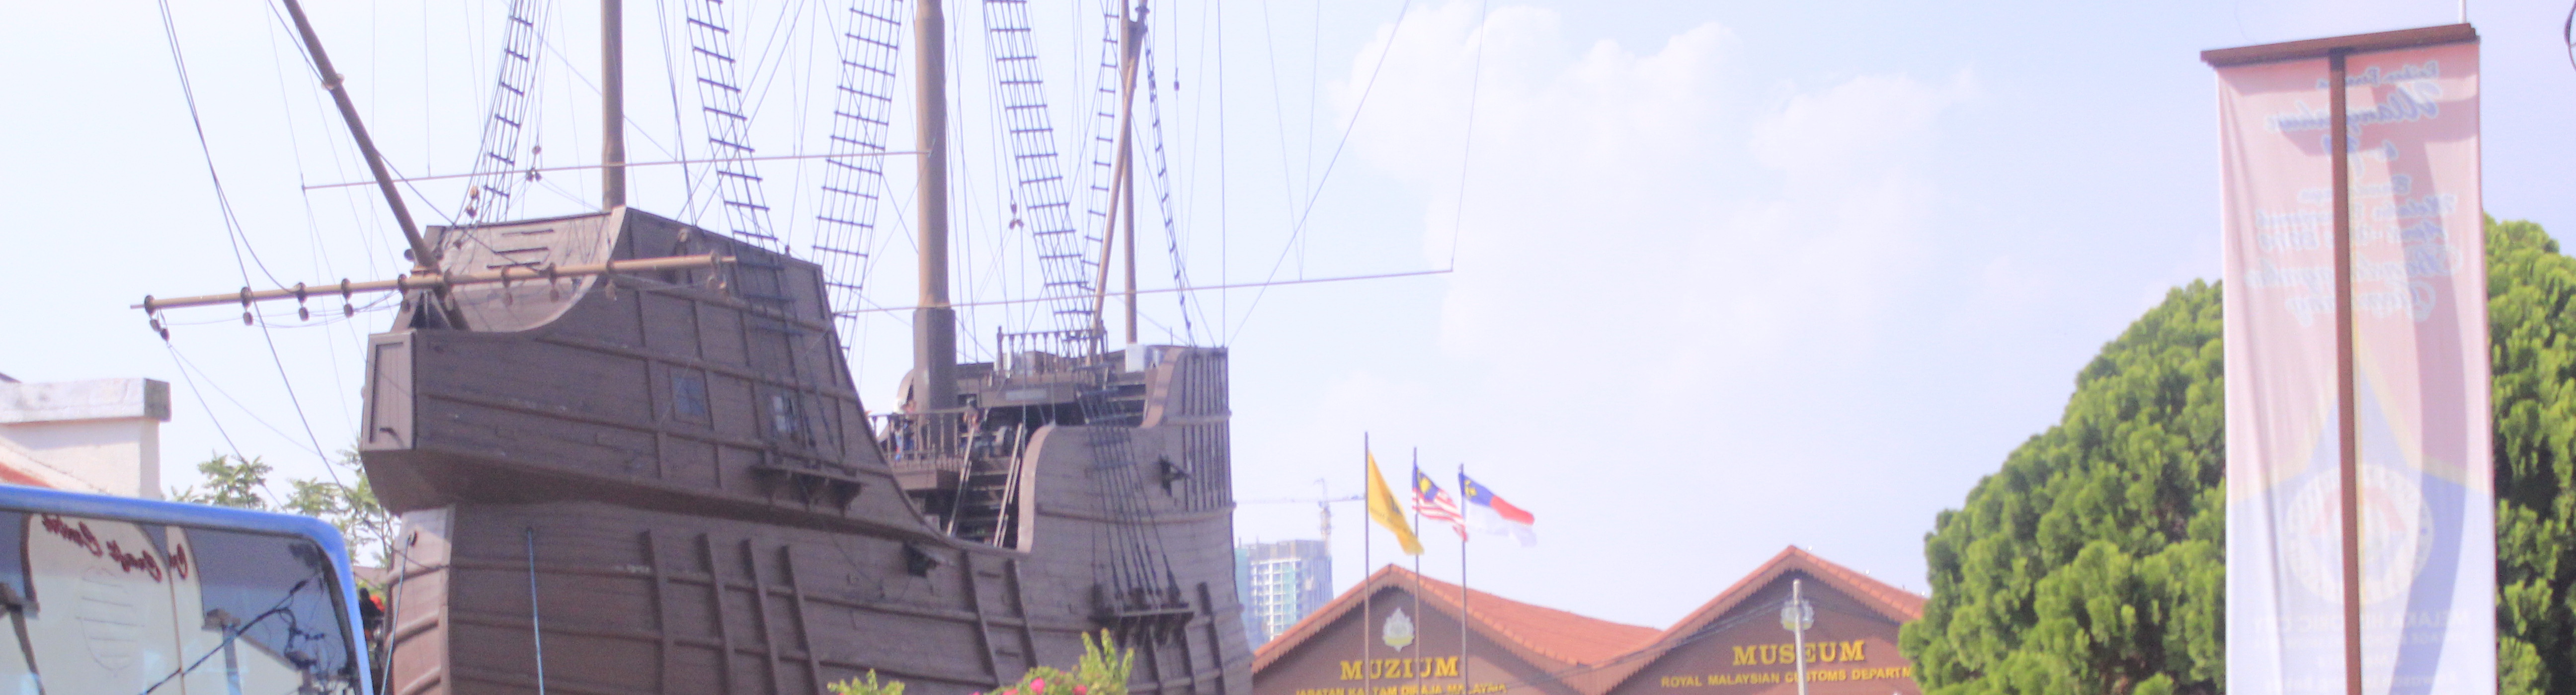 Kapal Museum Maritime (c) Arief Kurniawan/Travelingyuk